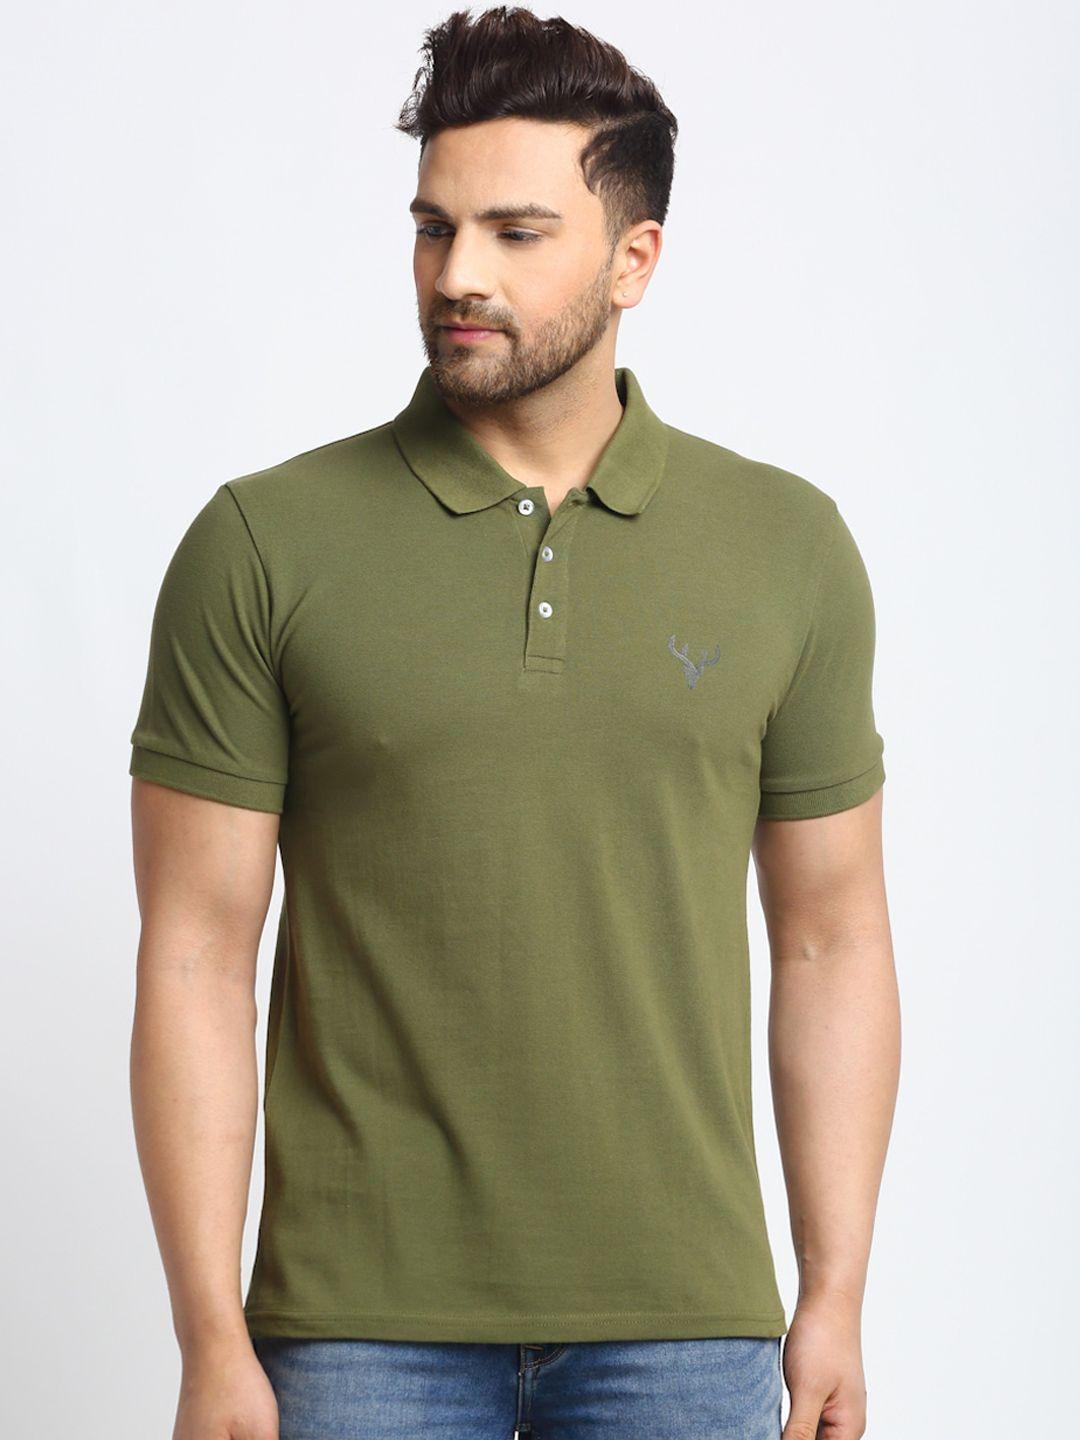 door74 men olive green solid polo collar t-shirt